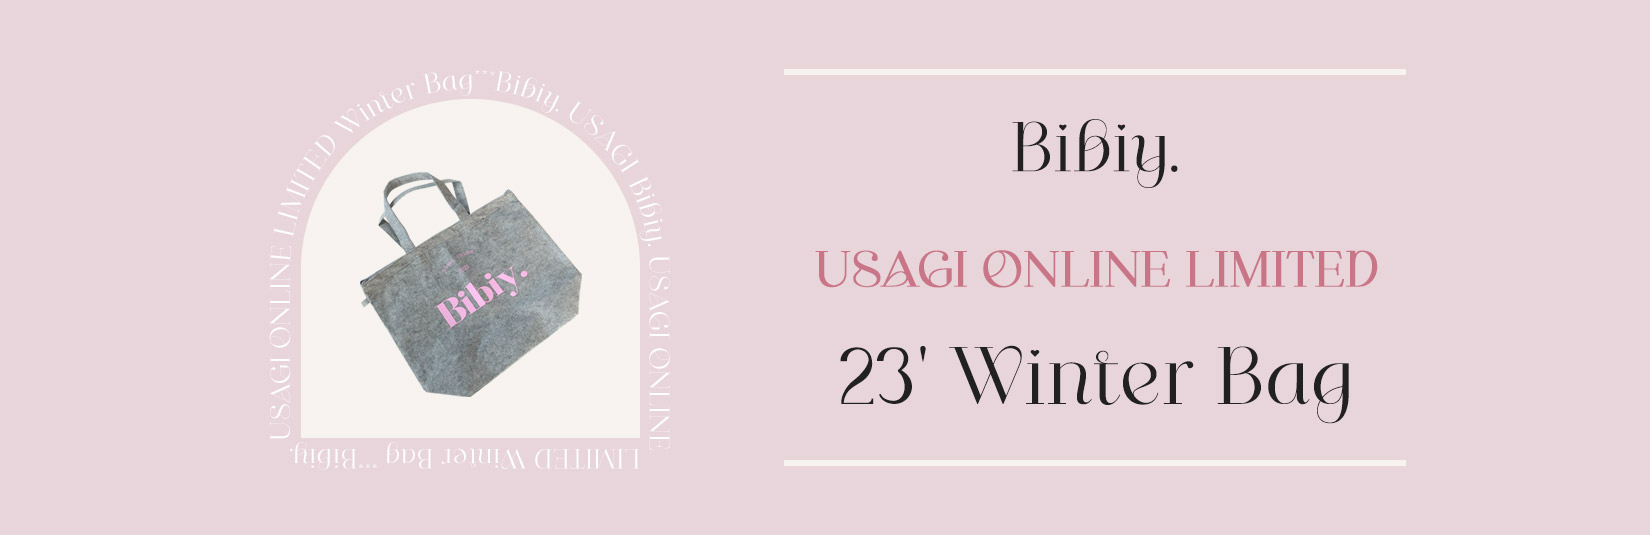 Bibiy. -USAGI ONLINE Limited 23'WINTER BAG-